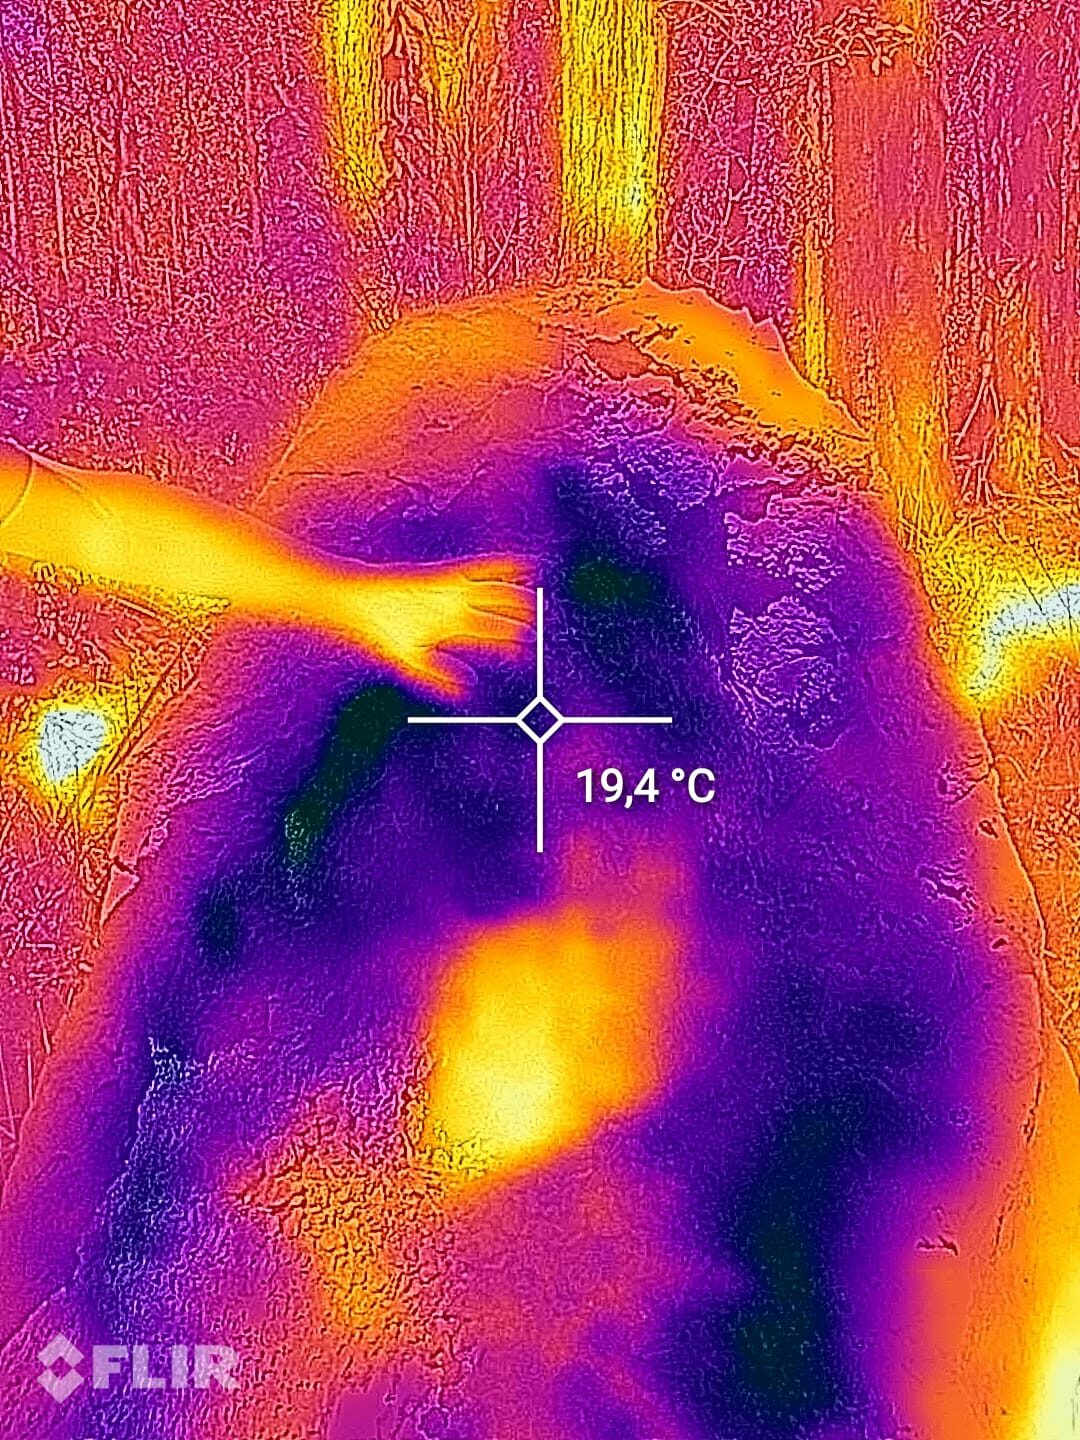 Nest of Coptotermes lacteus (termite nest) - thermal image